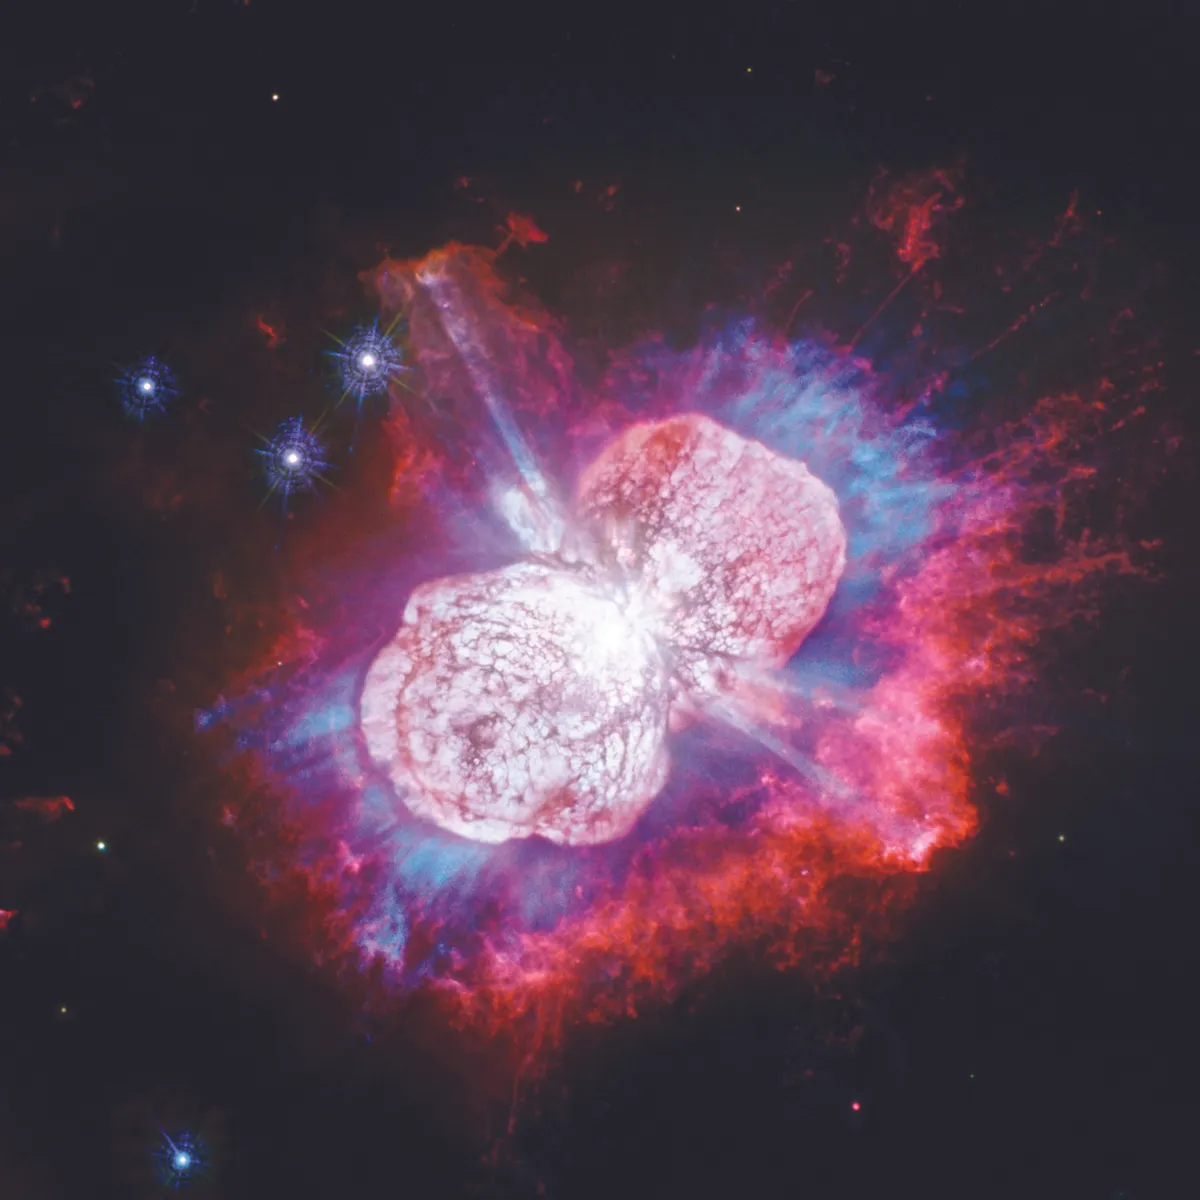 The Homunculus Nebula Hubble Space Telescope, 1 July 2019